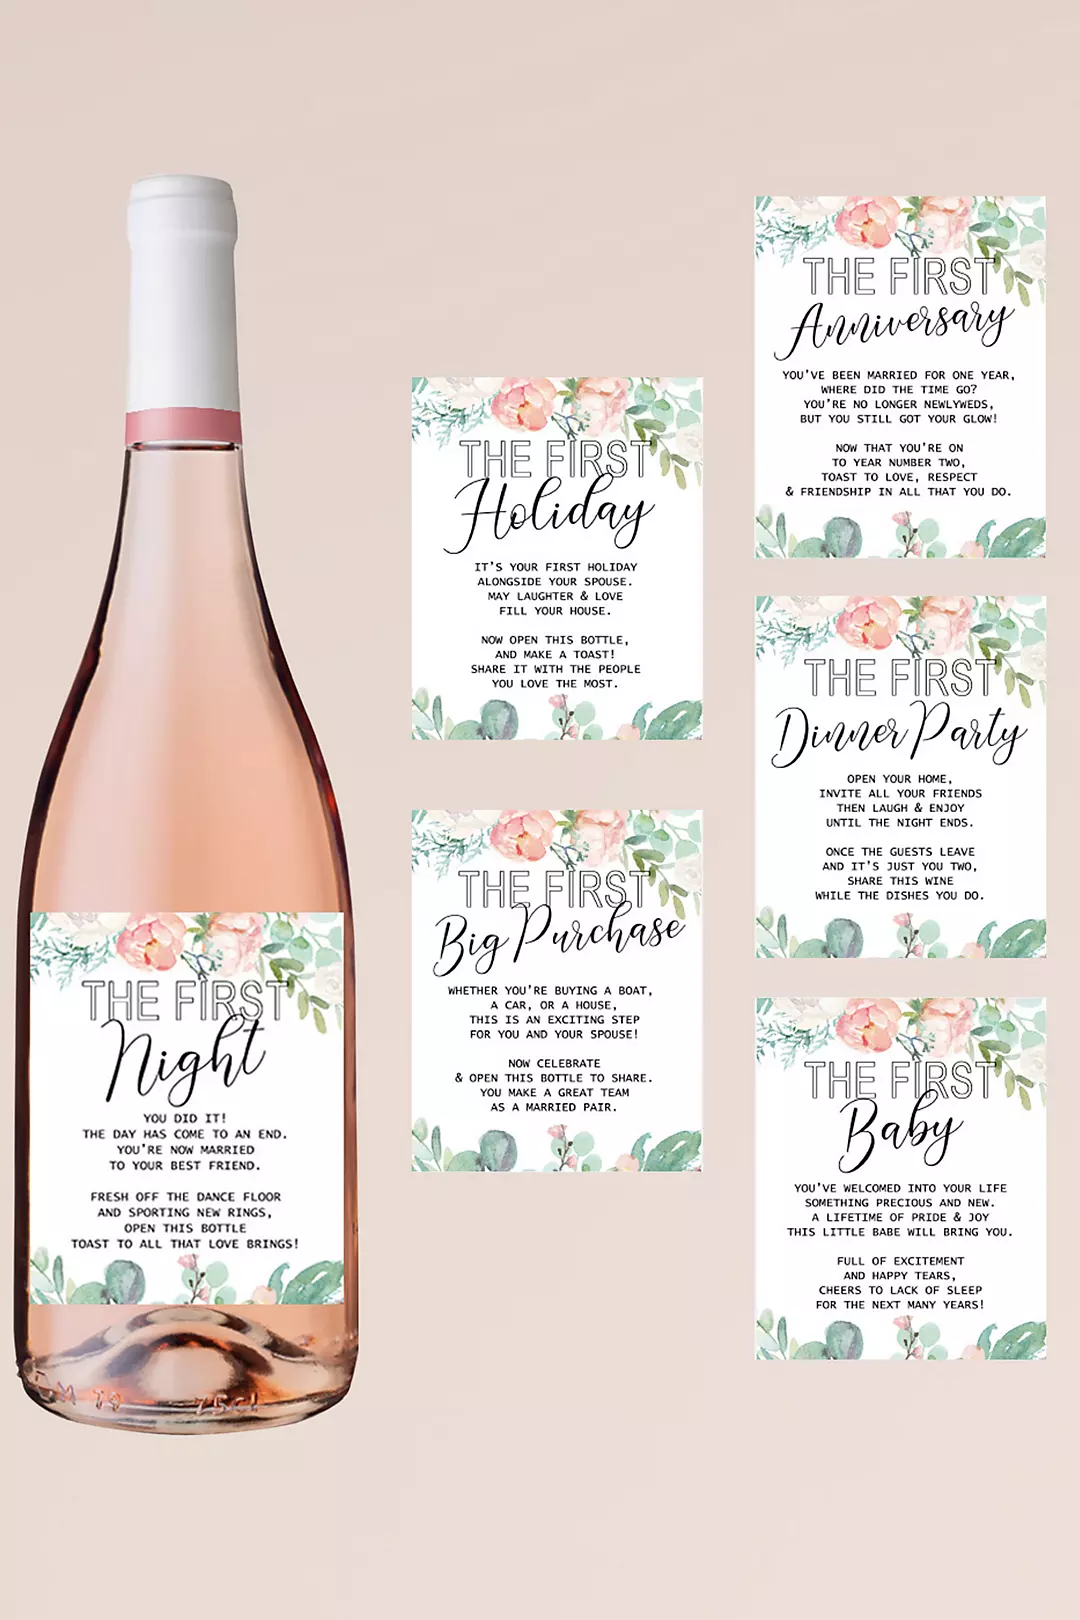 Marriage Milestone Floral Wine Label Set Image